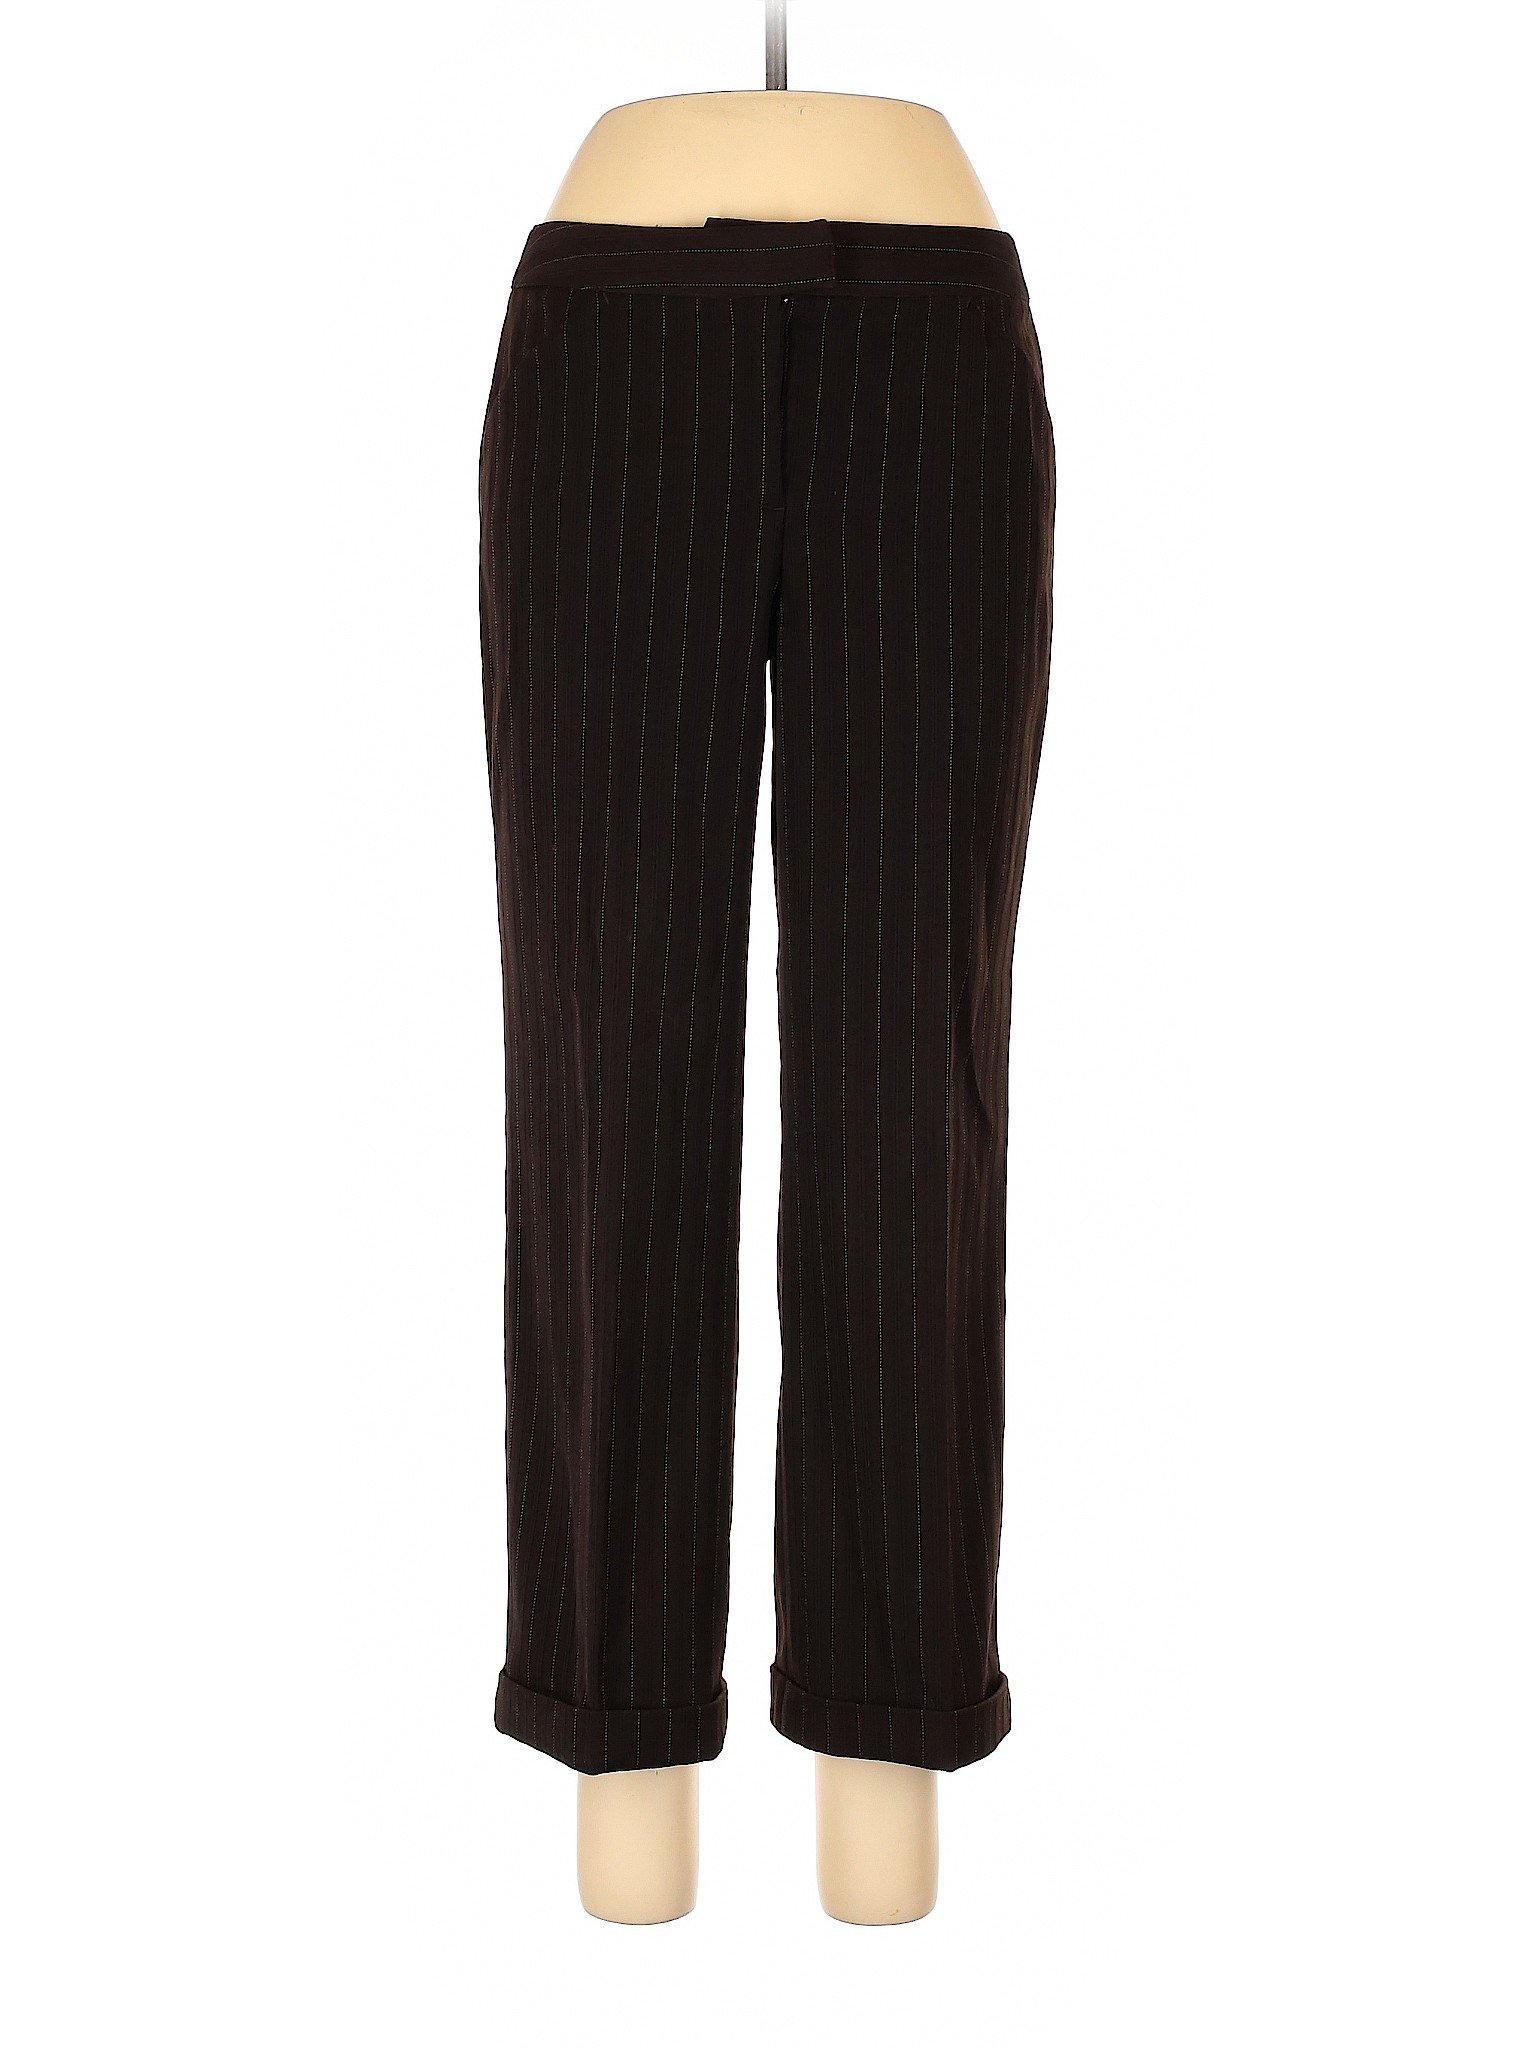 Max Studio Women Black Dress Pants 8 | eBay